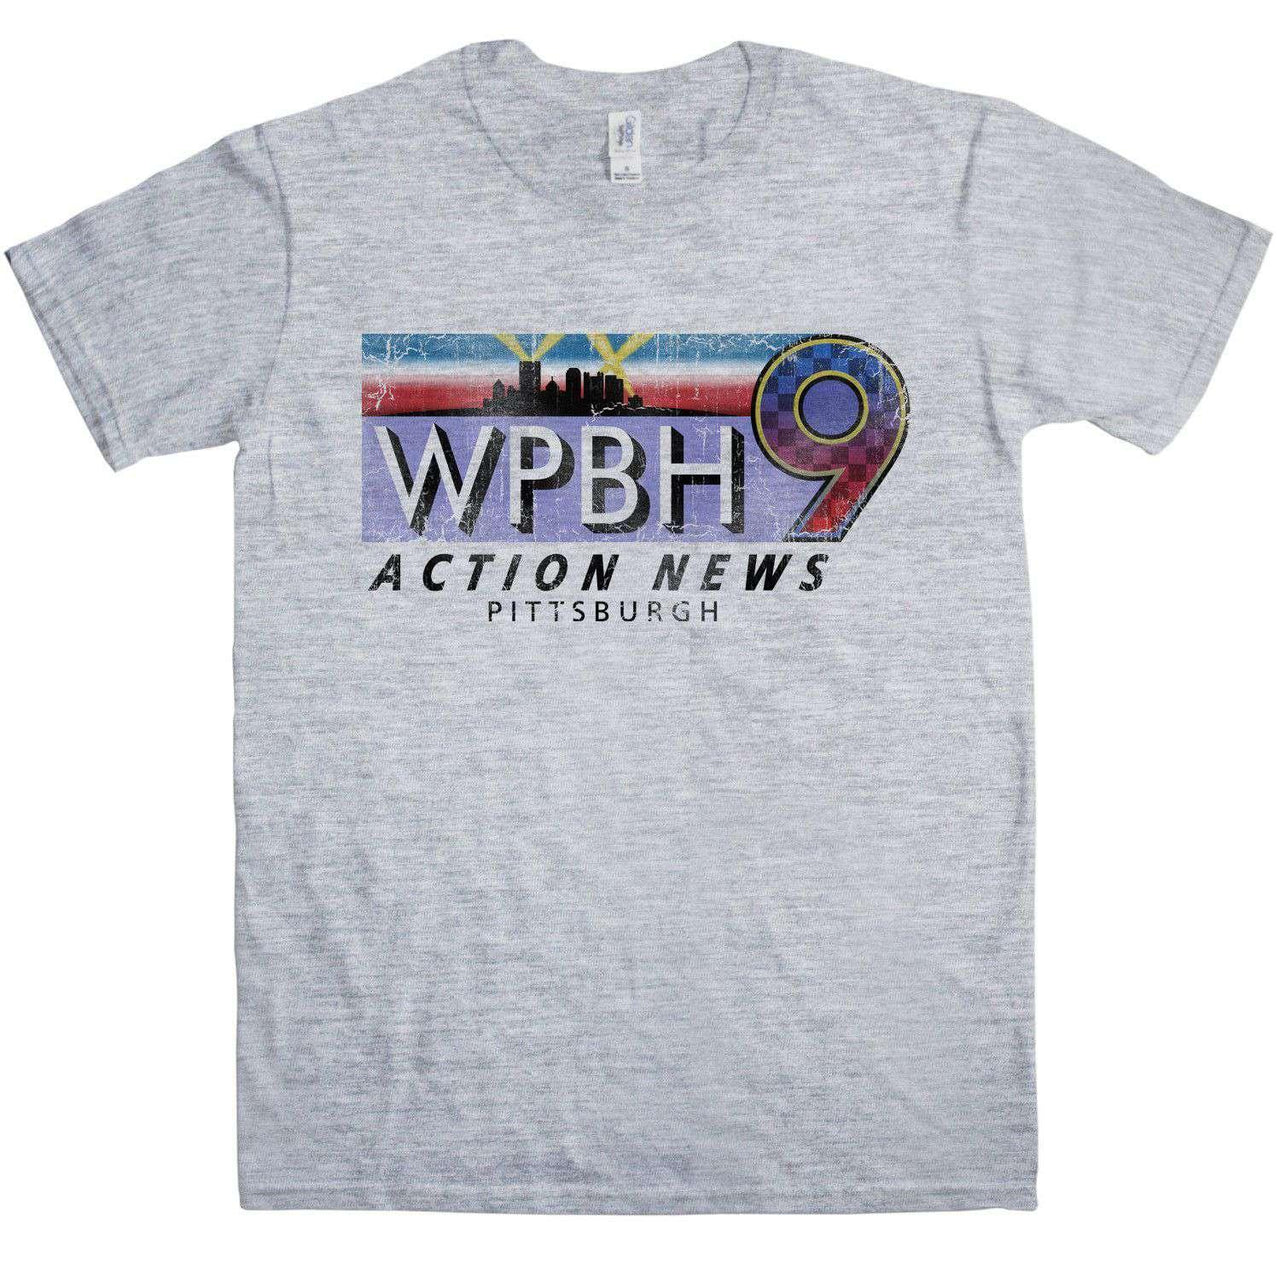 WPBH9 News T-Shirt For Men 8Ball